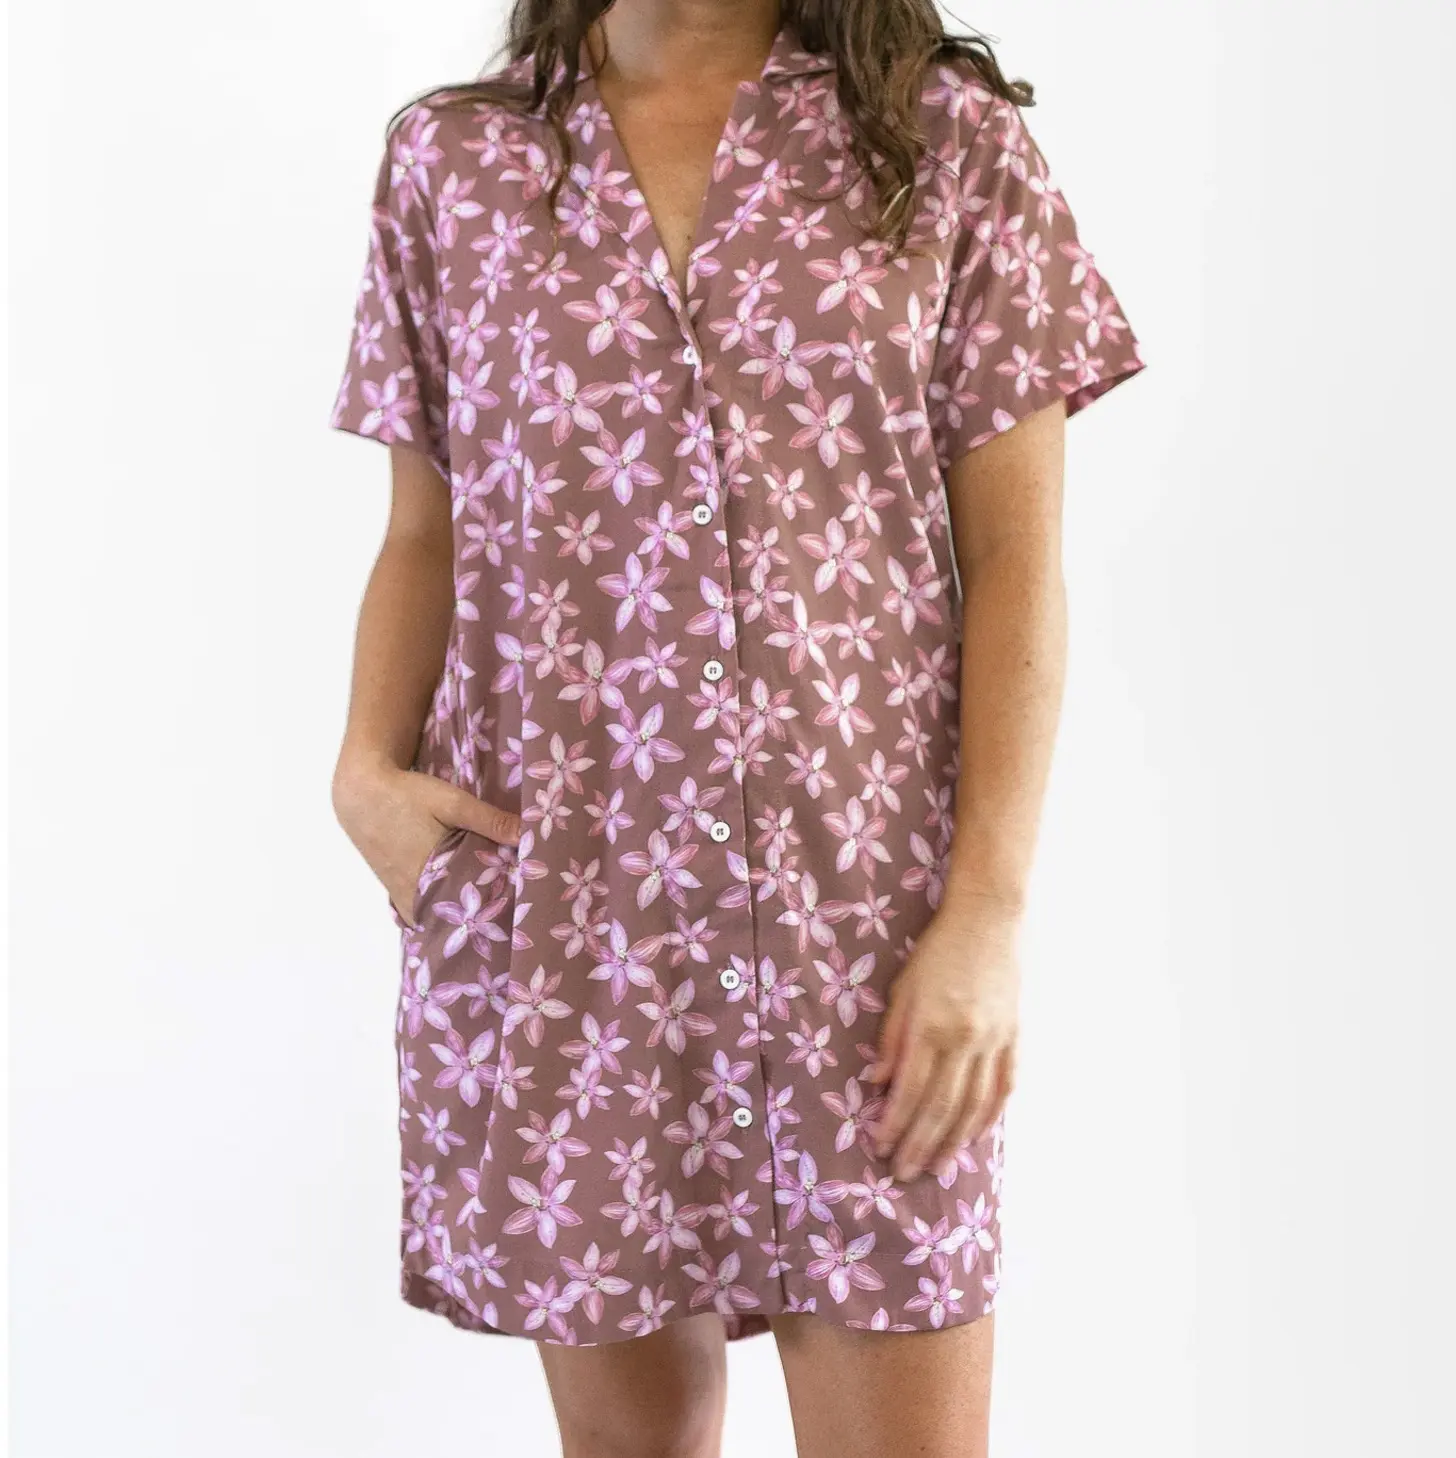 Usa Hot Selling Rayon Vrouwen T-Shirt Jurk Op Maat Van Uw Ontwerp Prints Knoop Up Shirt Jurk